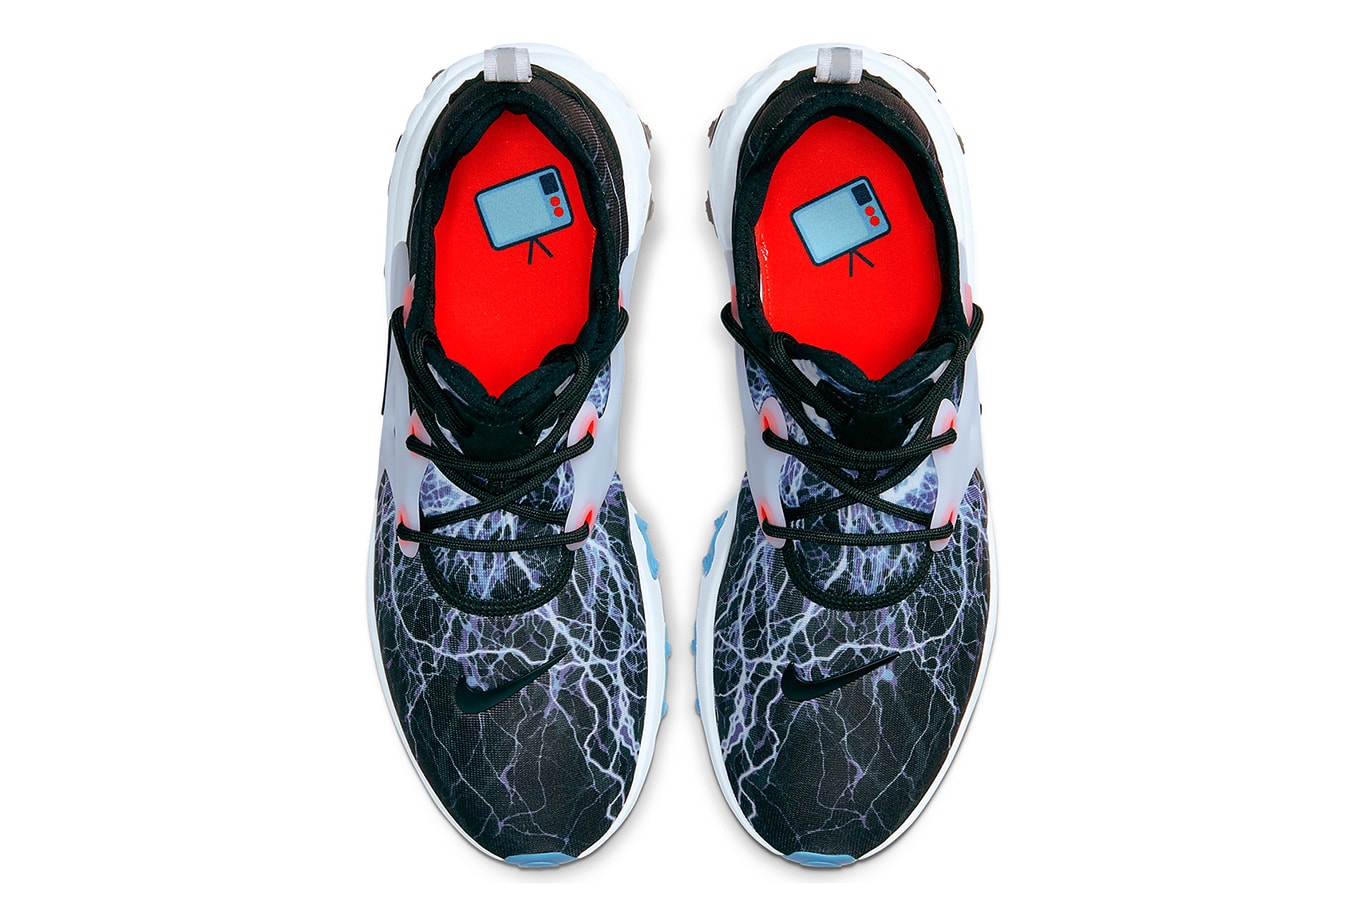 Nike Presto React Lightning Trouble at Home av2605-006 shoes kicks footwear running sportswear kicks React 